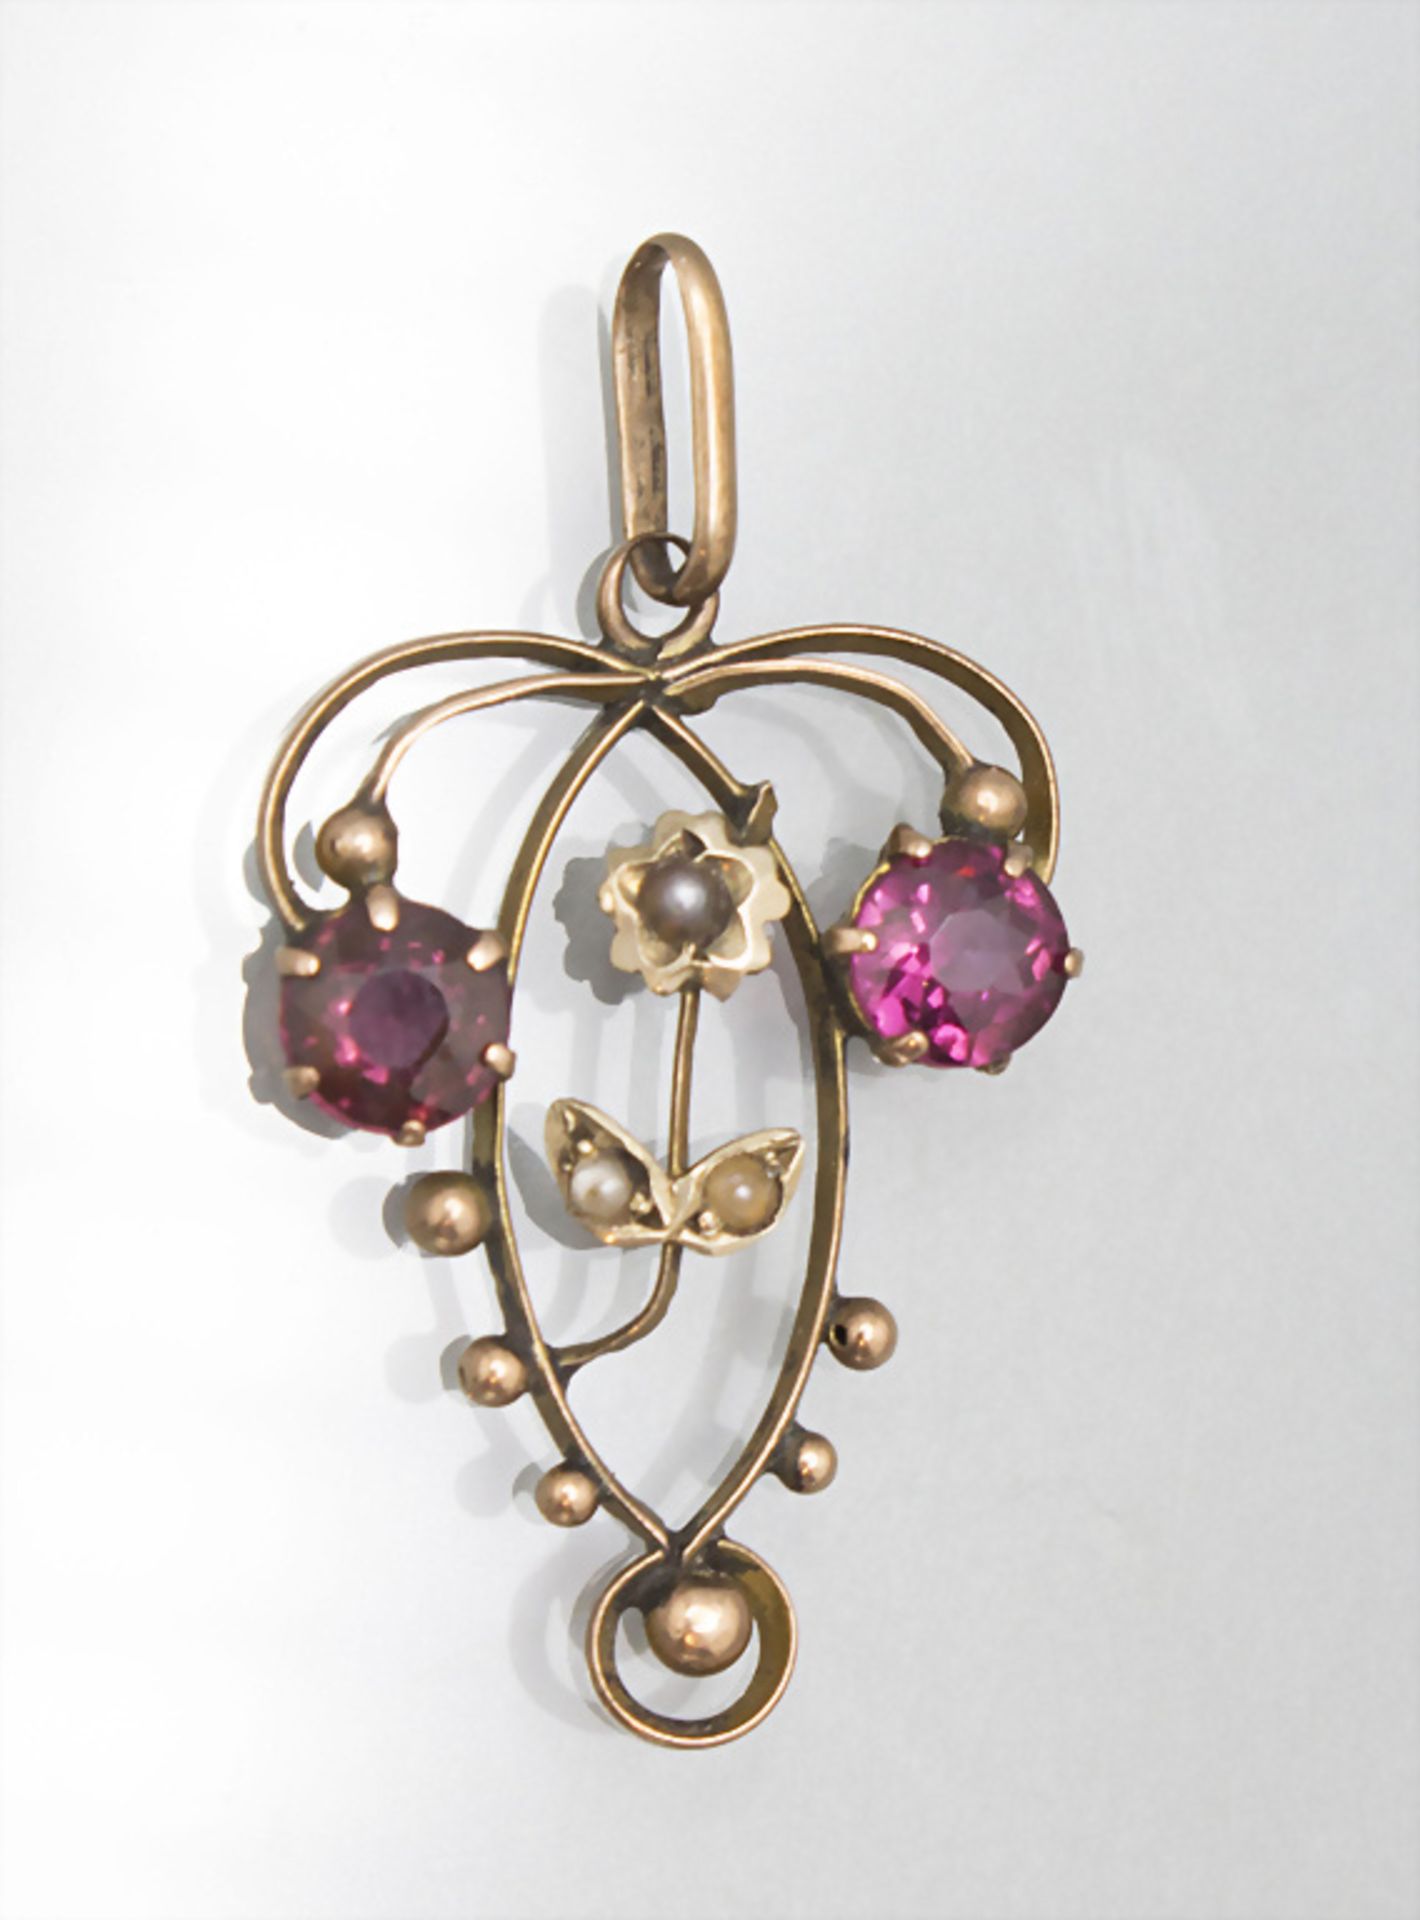 Jugendstil Anhänger mit kleiner Blüte / An Art Nouveau pendant with a small flower, England, ...